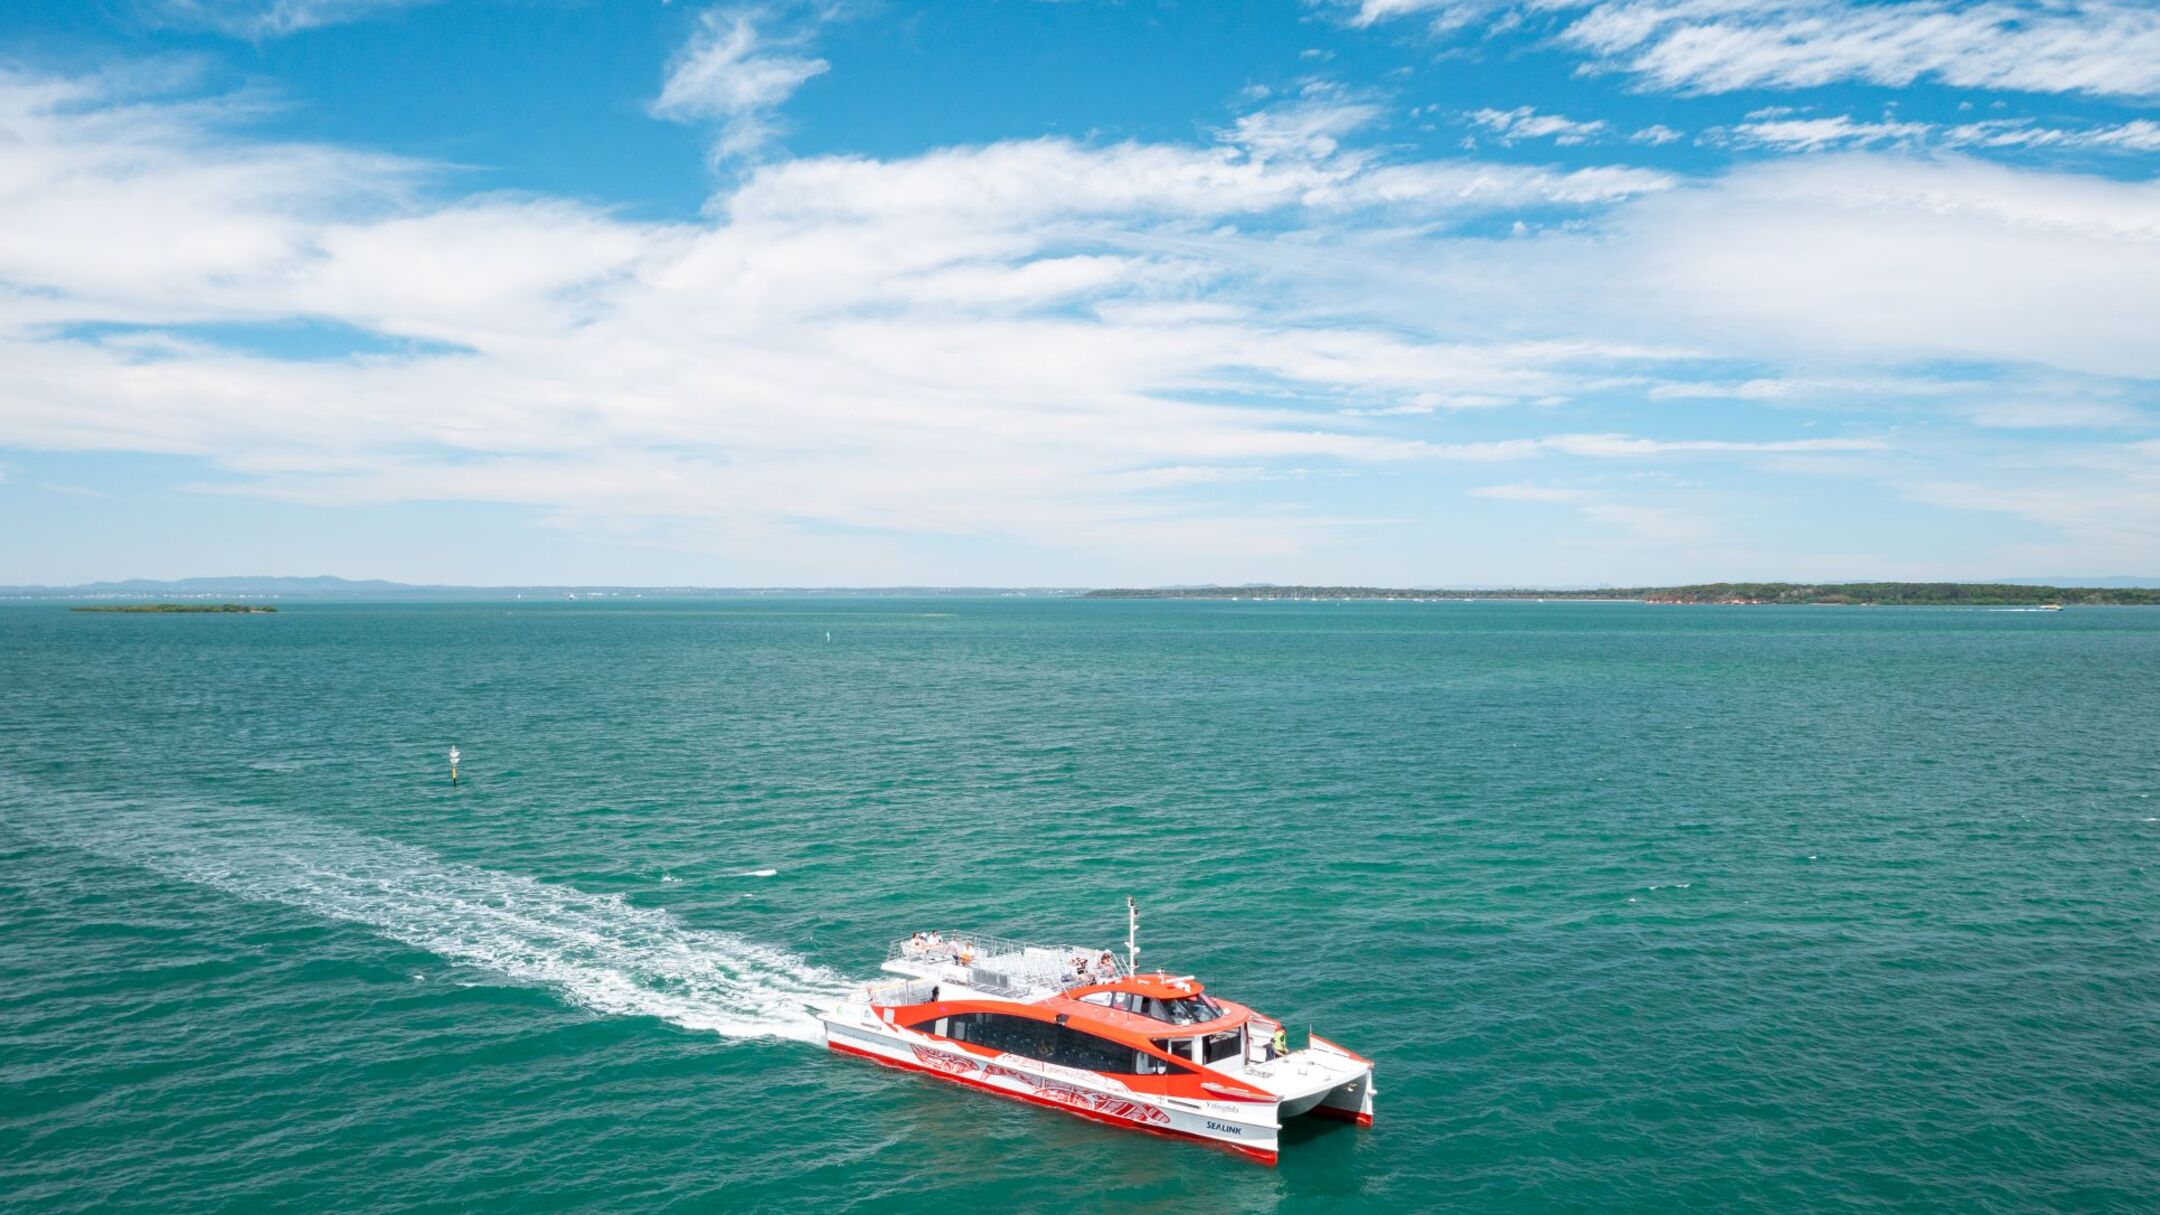 Stradbroke Island Passenger Ferry (Water Taxi) - Return 